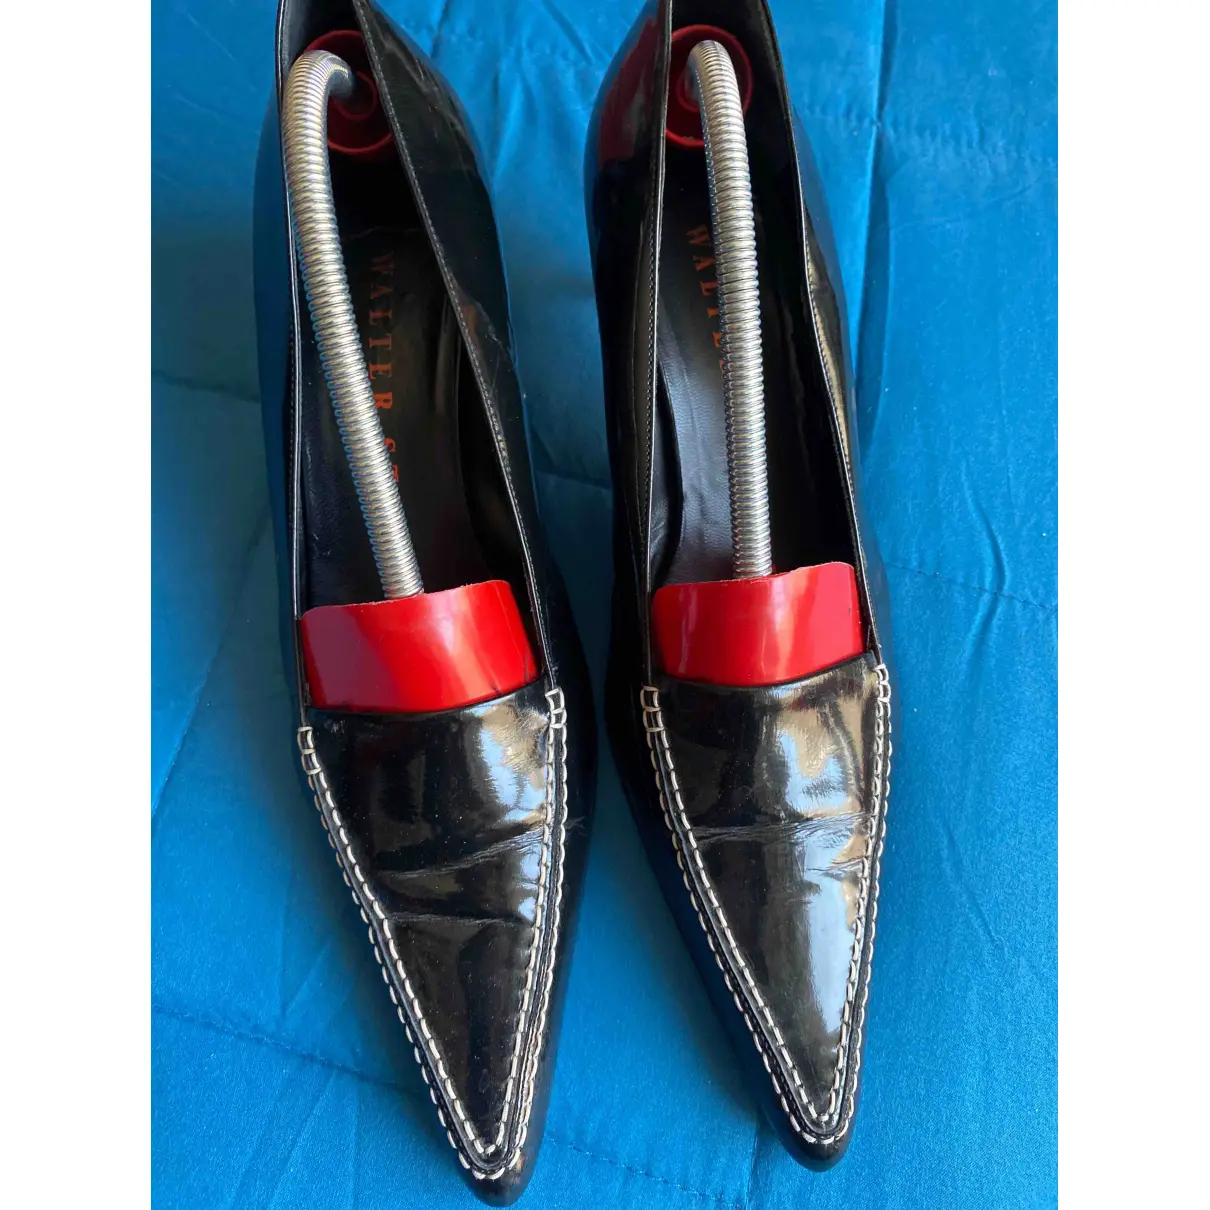 Buy Walter Steiger Patent leather heels online